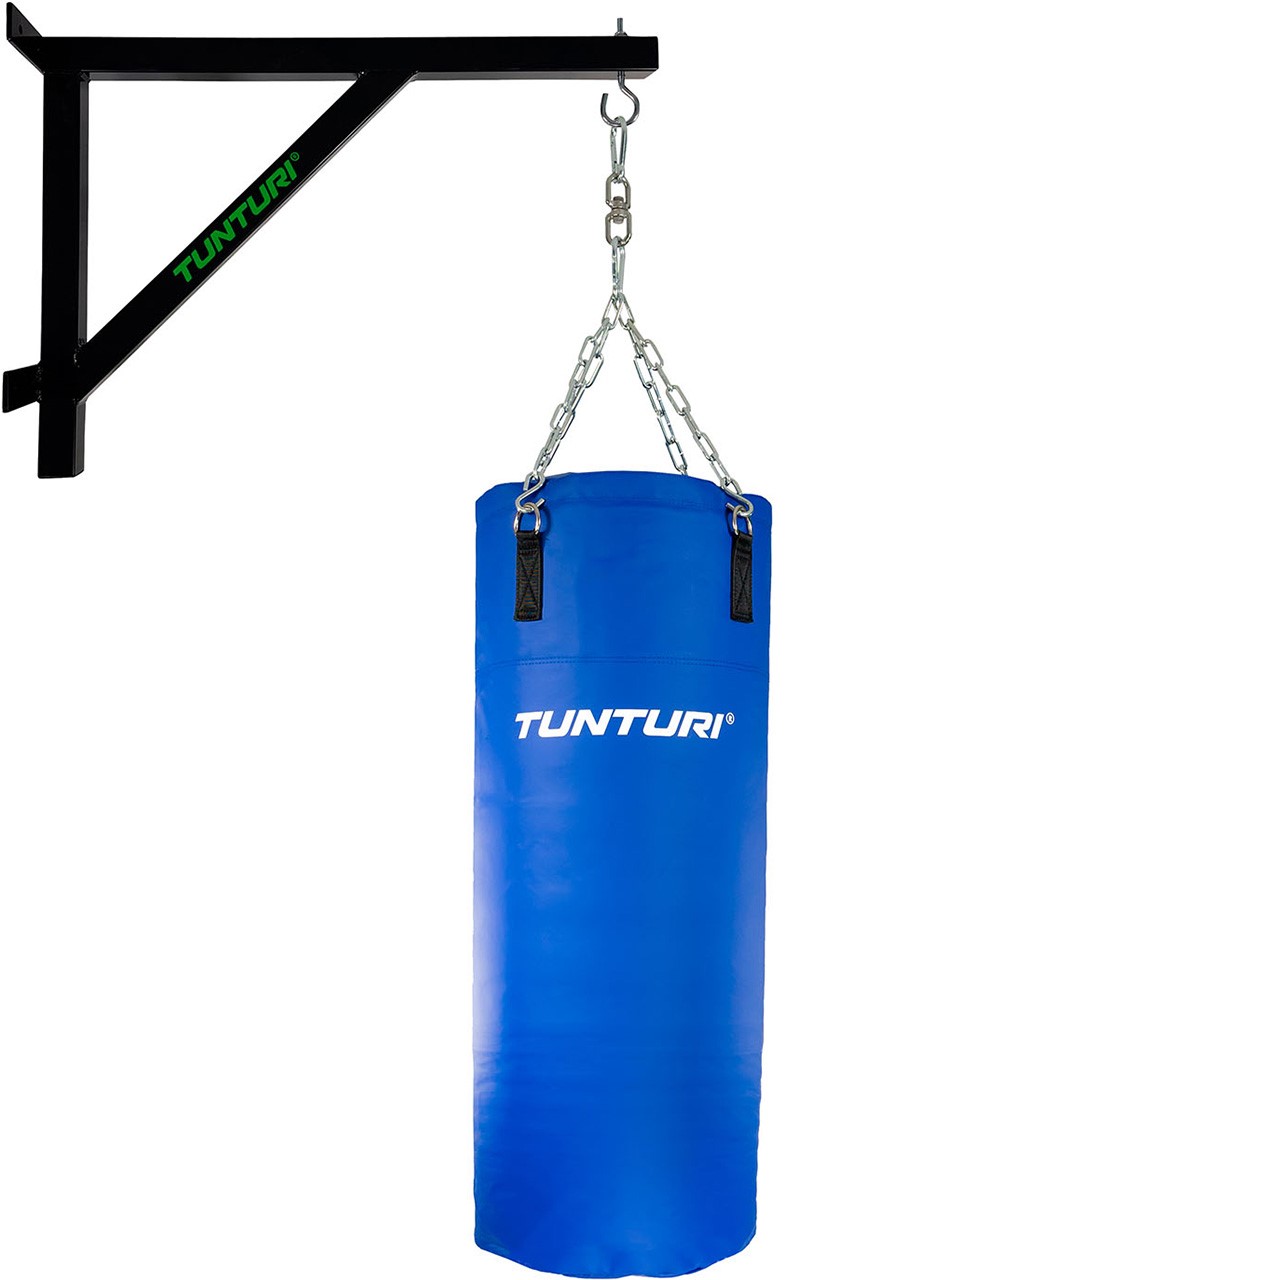 Tunturi Water Boxing Bag 100 cm 30 kg